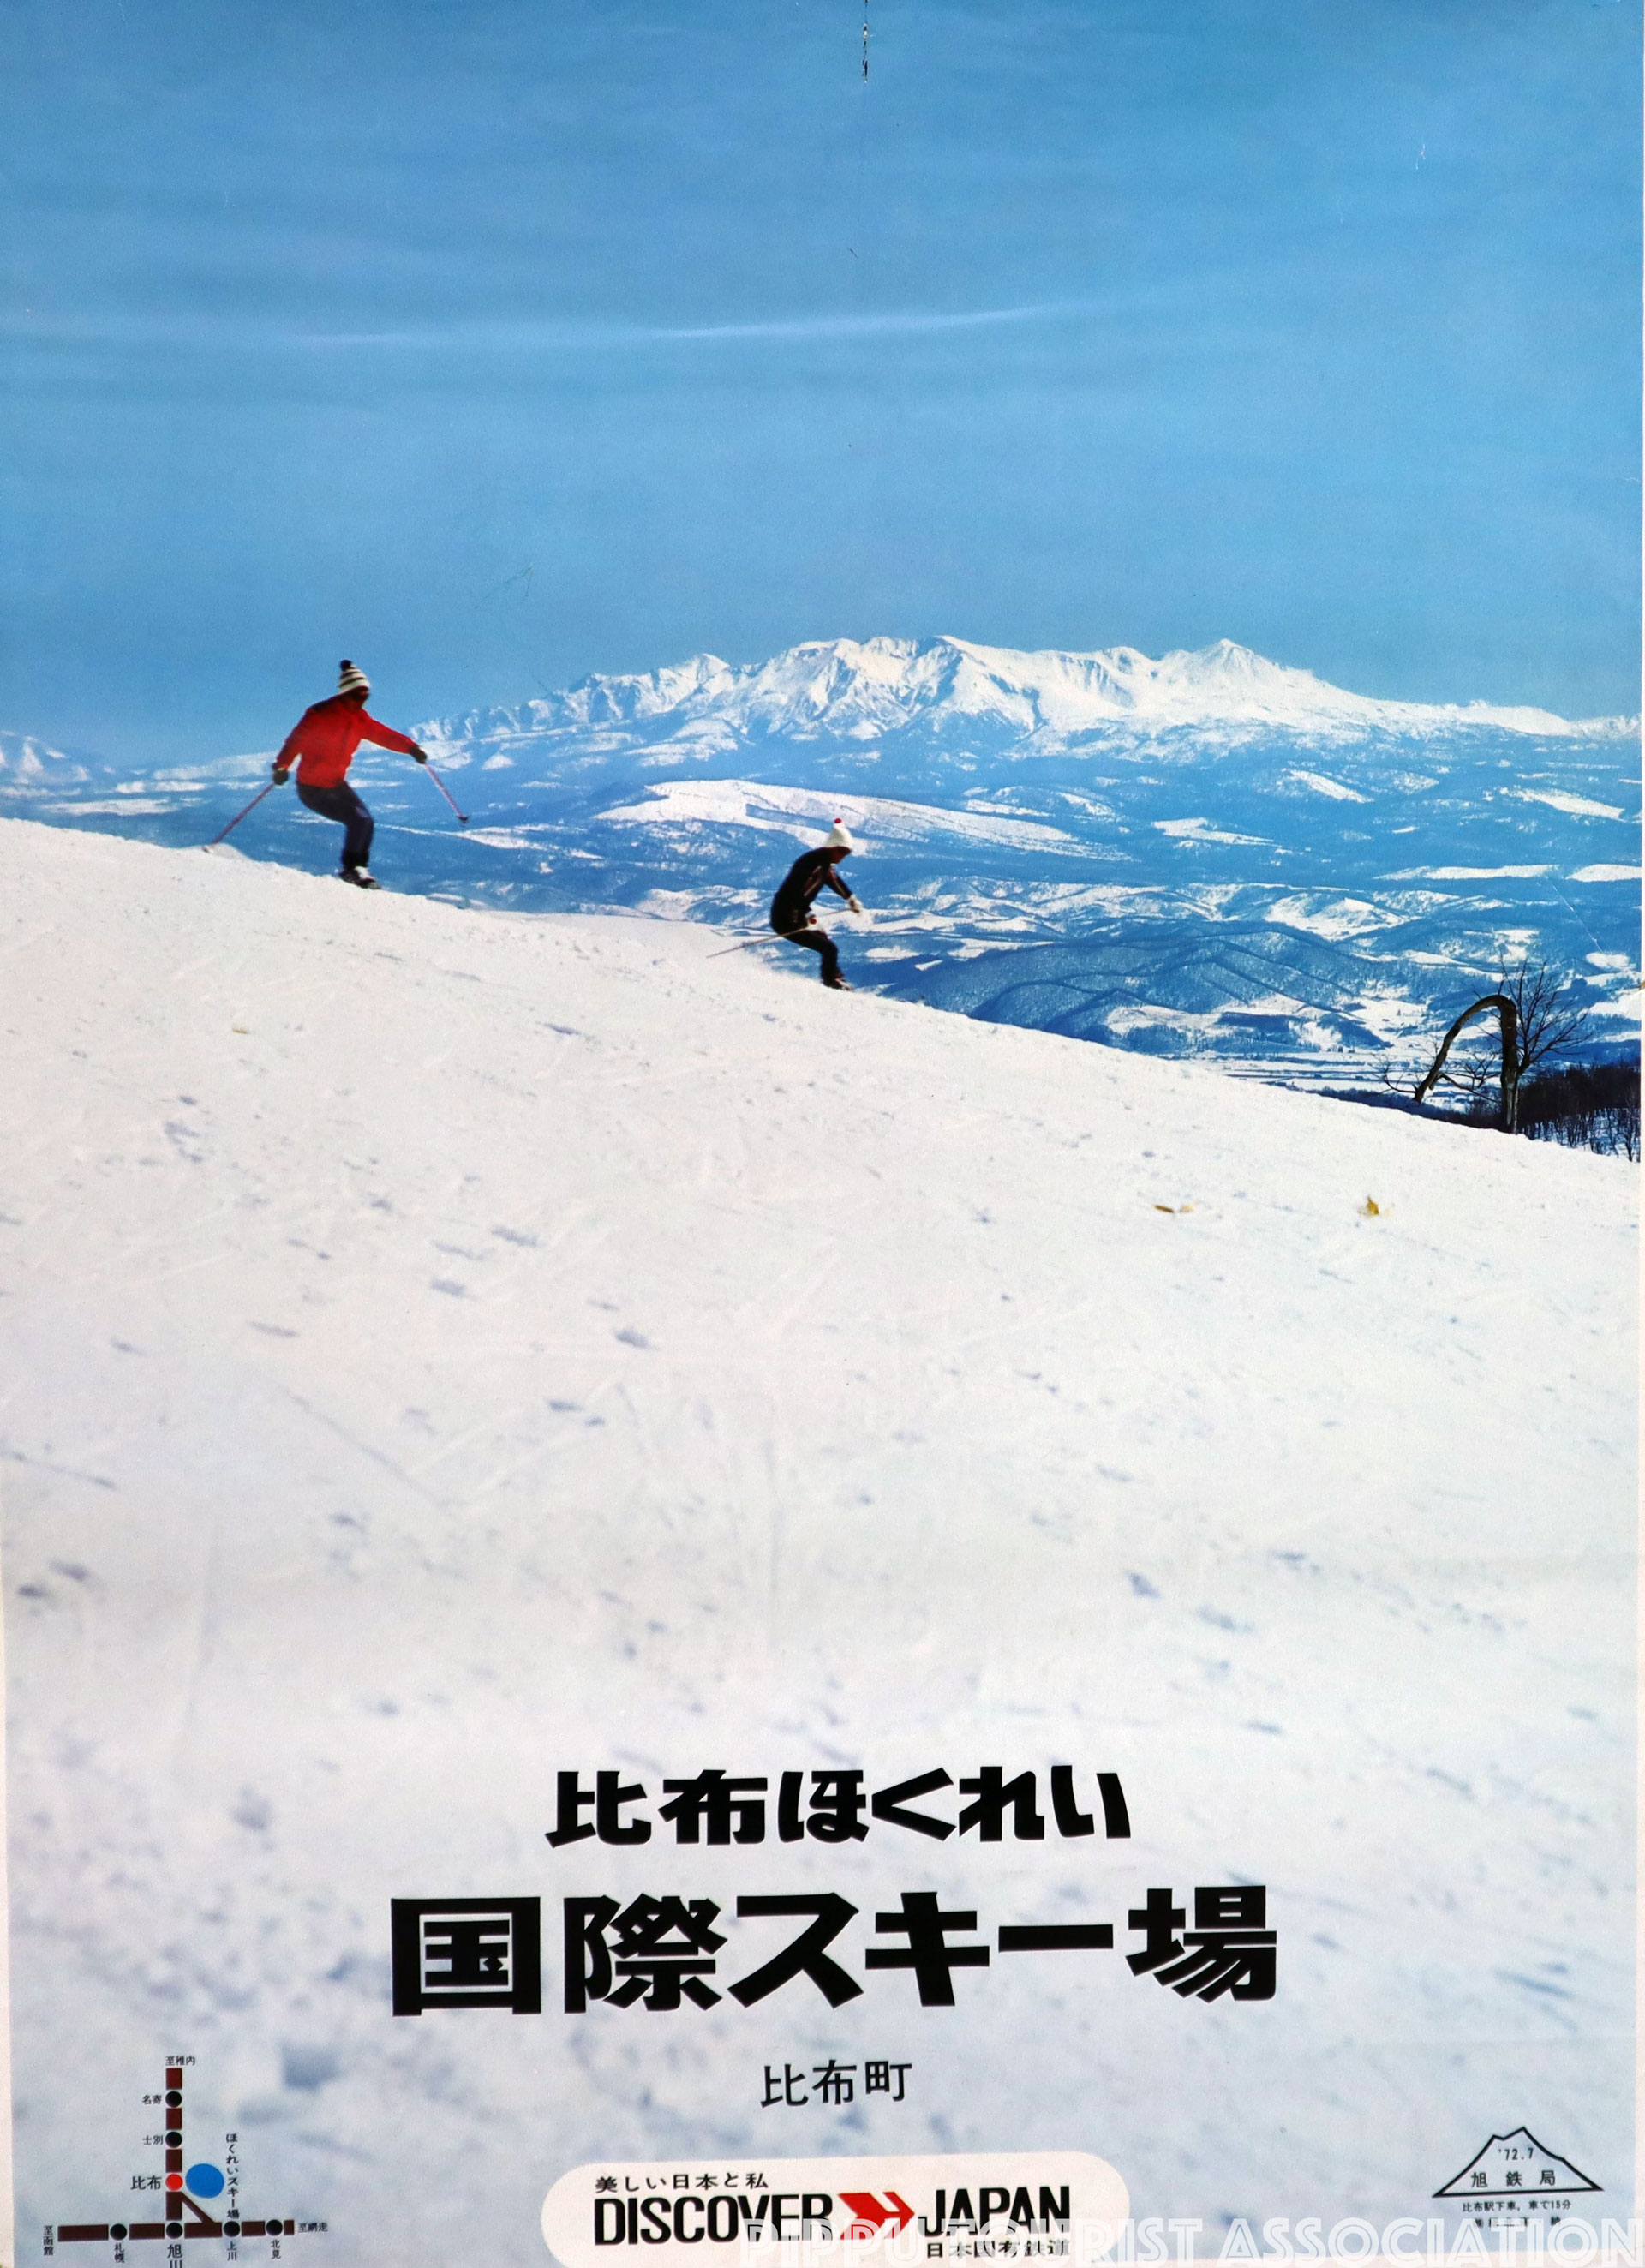 昭和47年比布北嶺国際スキー場